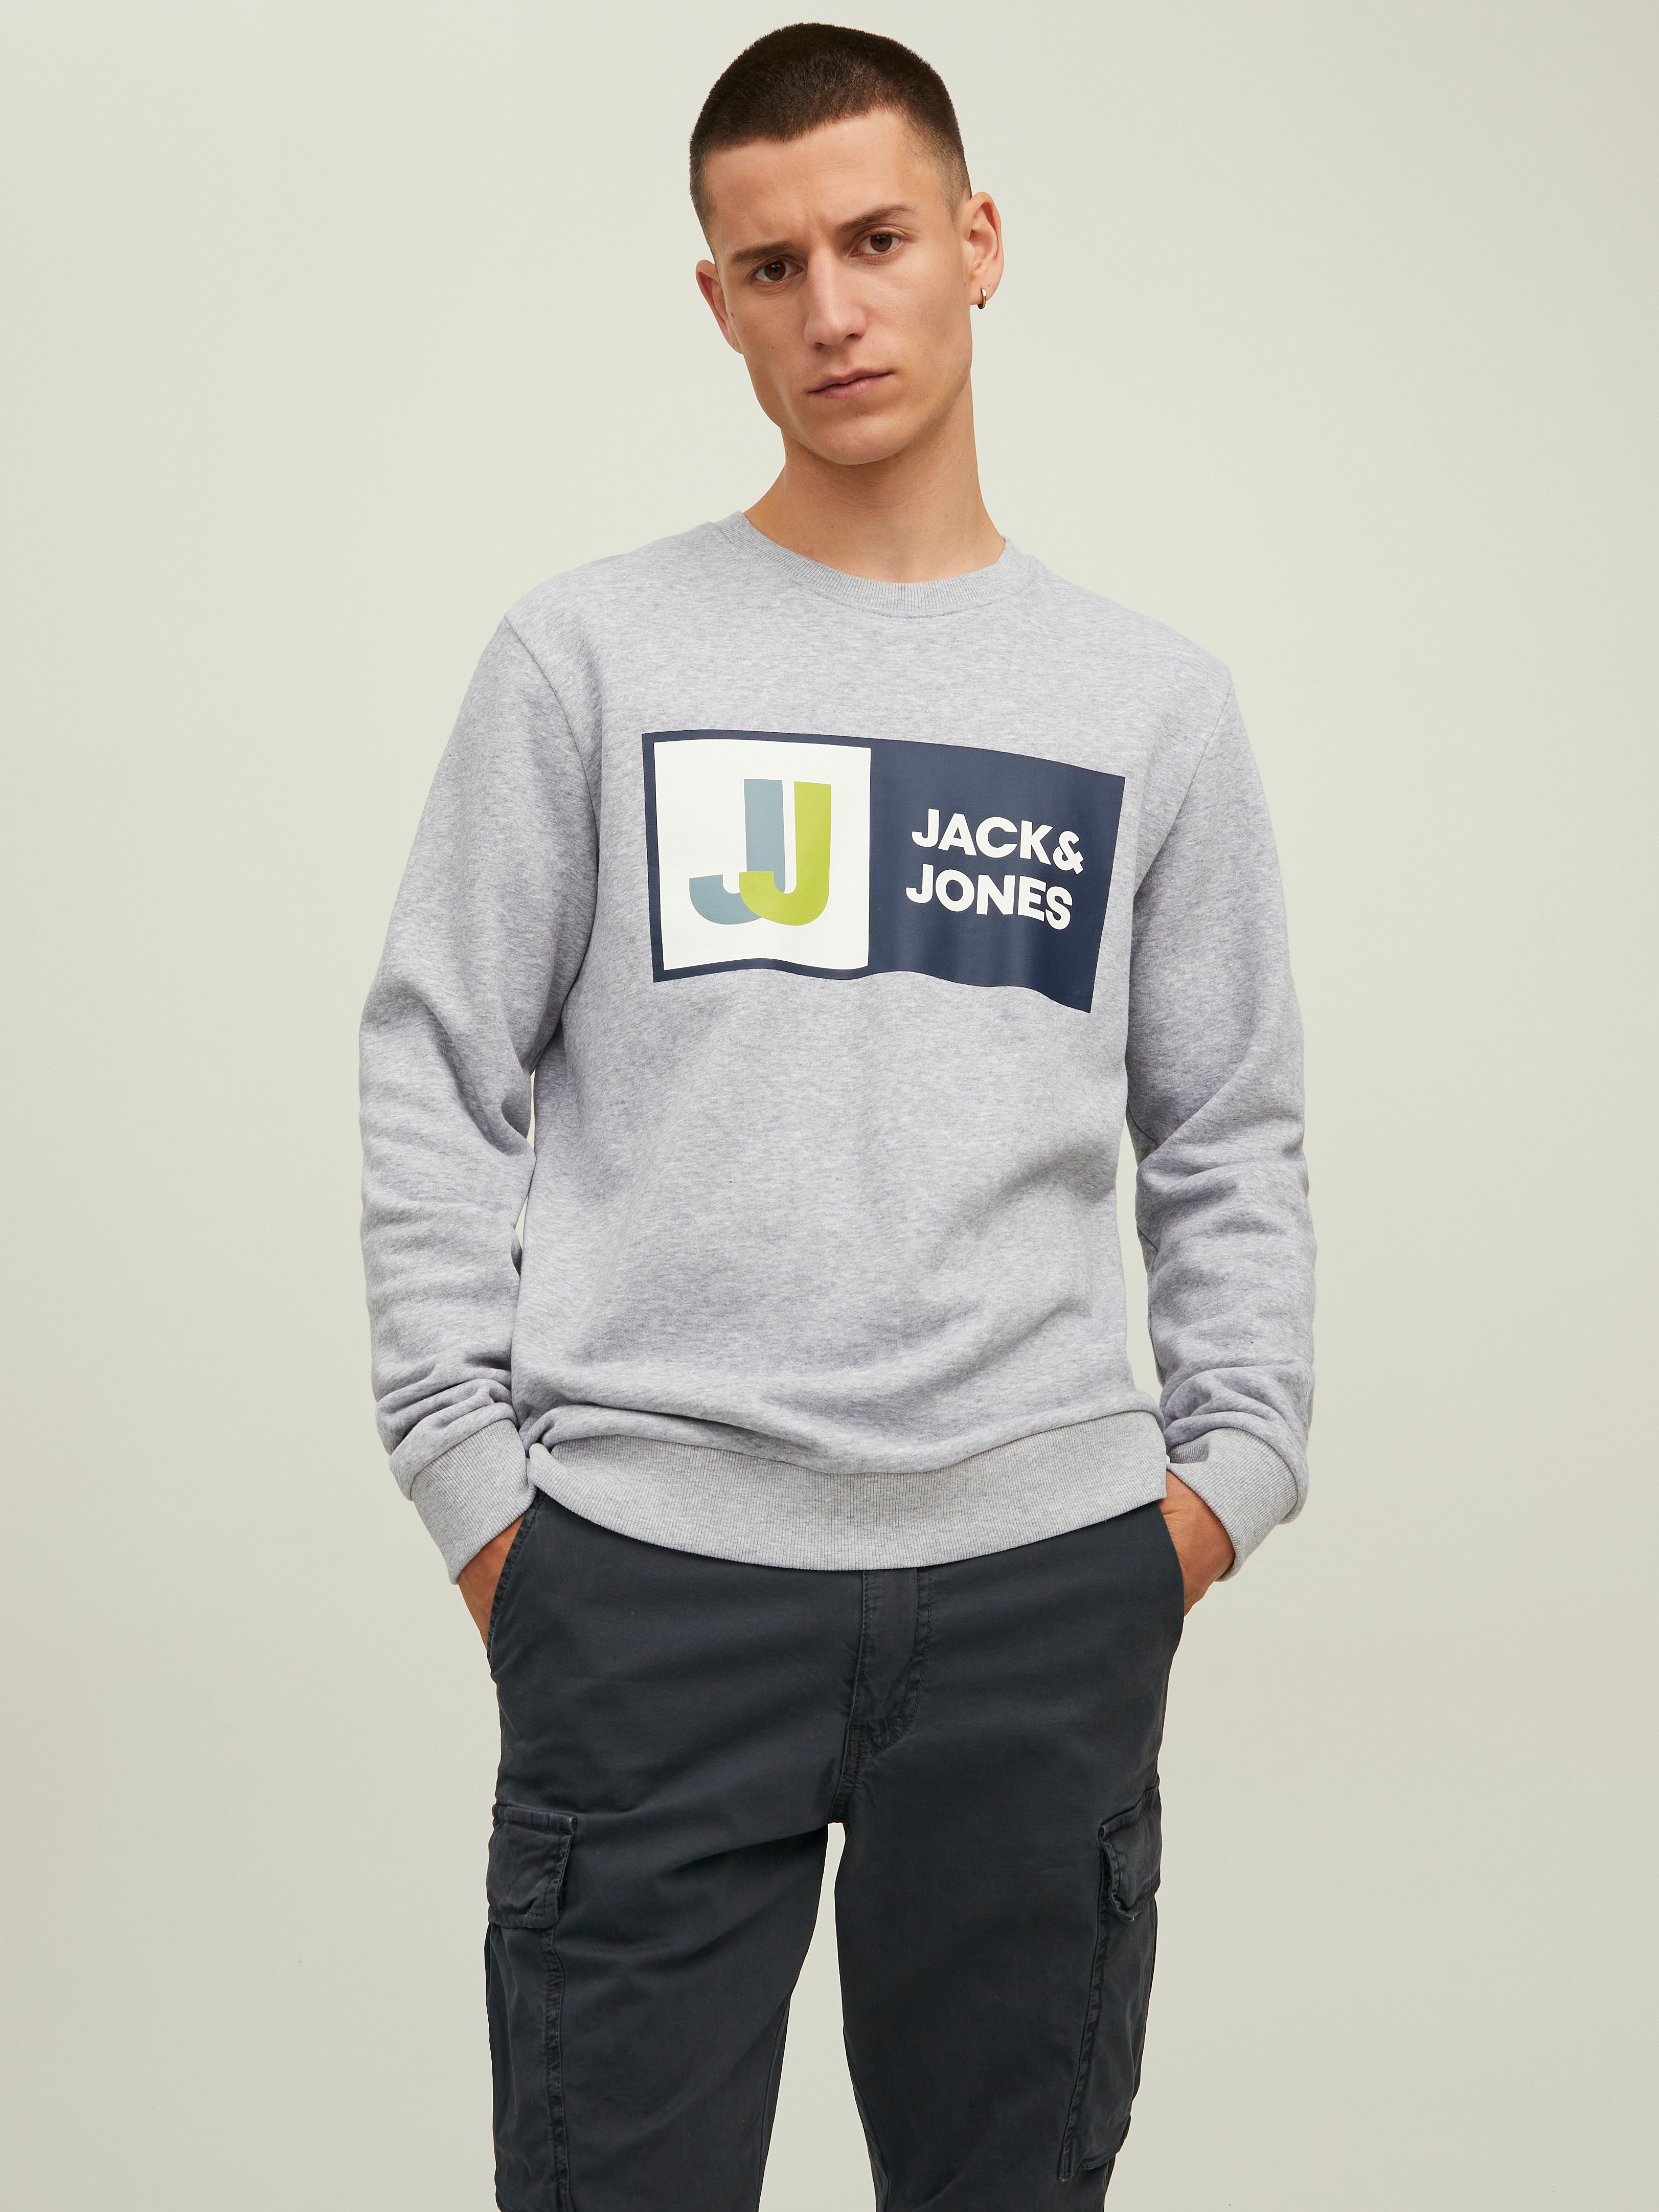 Jack & Jones Homme Vêtements Pulls & Gilets Pulls Sweatshirts Ras-du-cou Avec Logo Sweat-shirt Men grey 